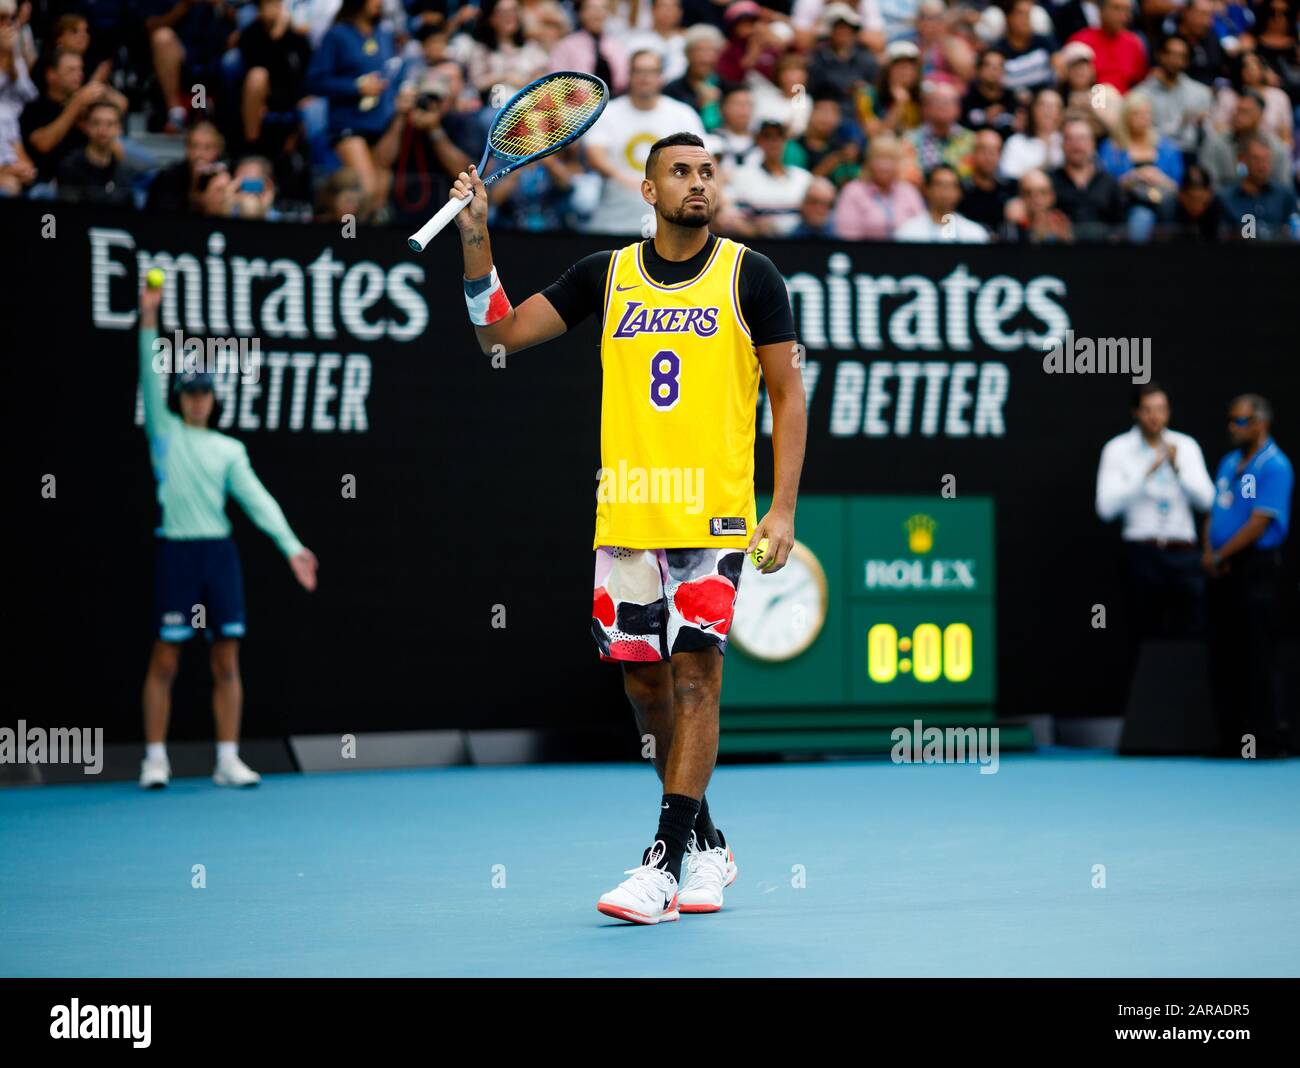 Nick Kyrgios Wore Kobe Bryant Jersey to Australian Open Match